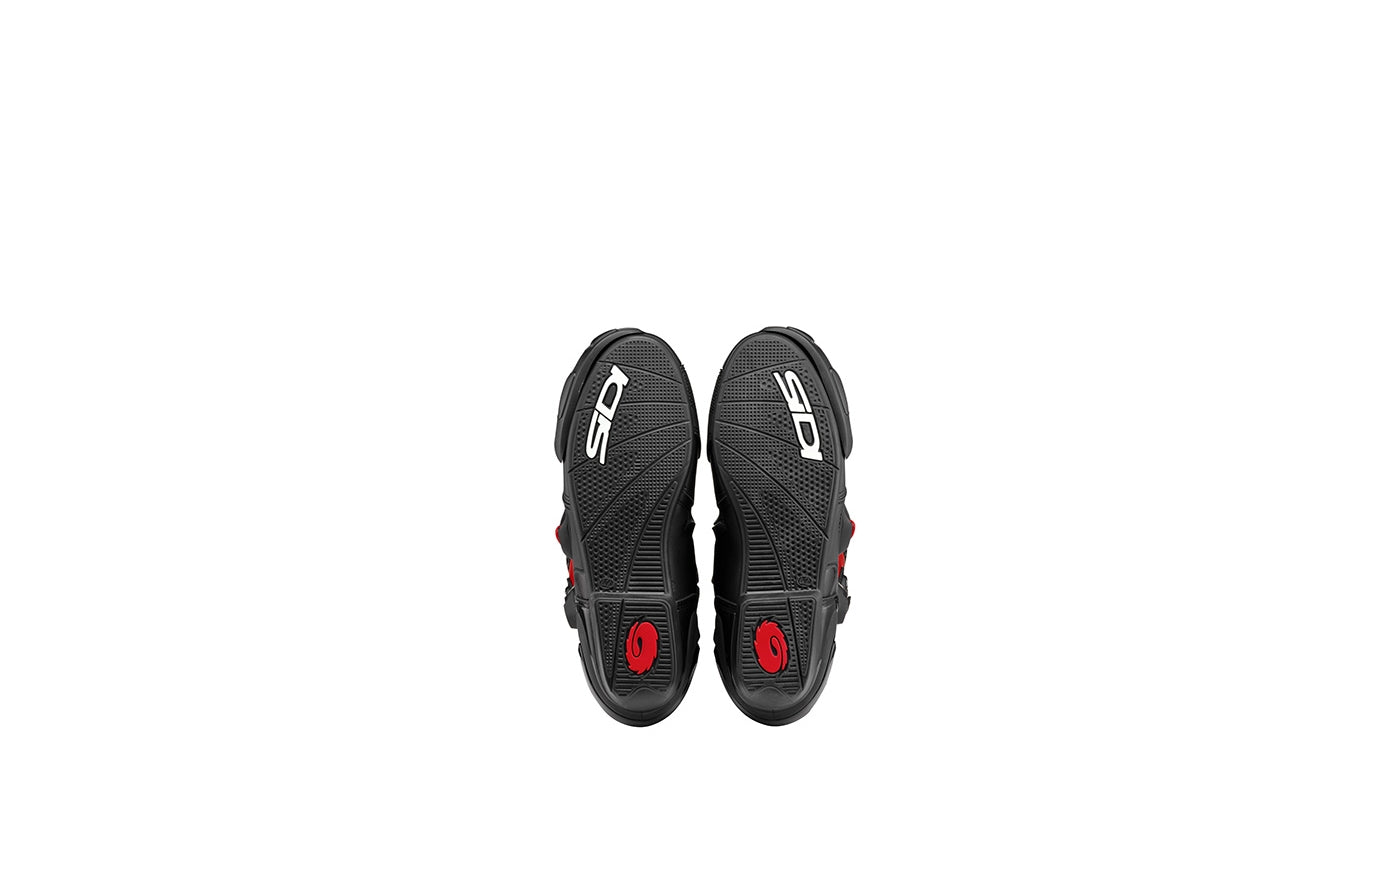 SIDI Vertigo 2 Black/Red Boots